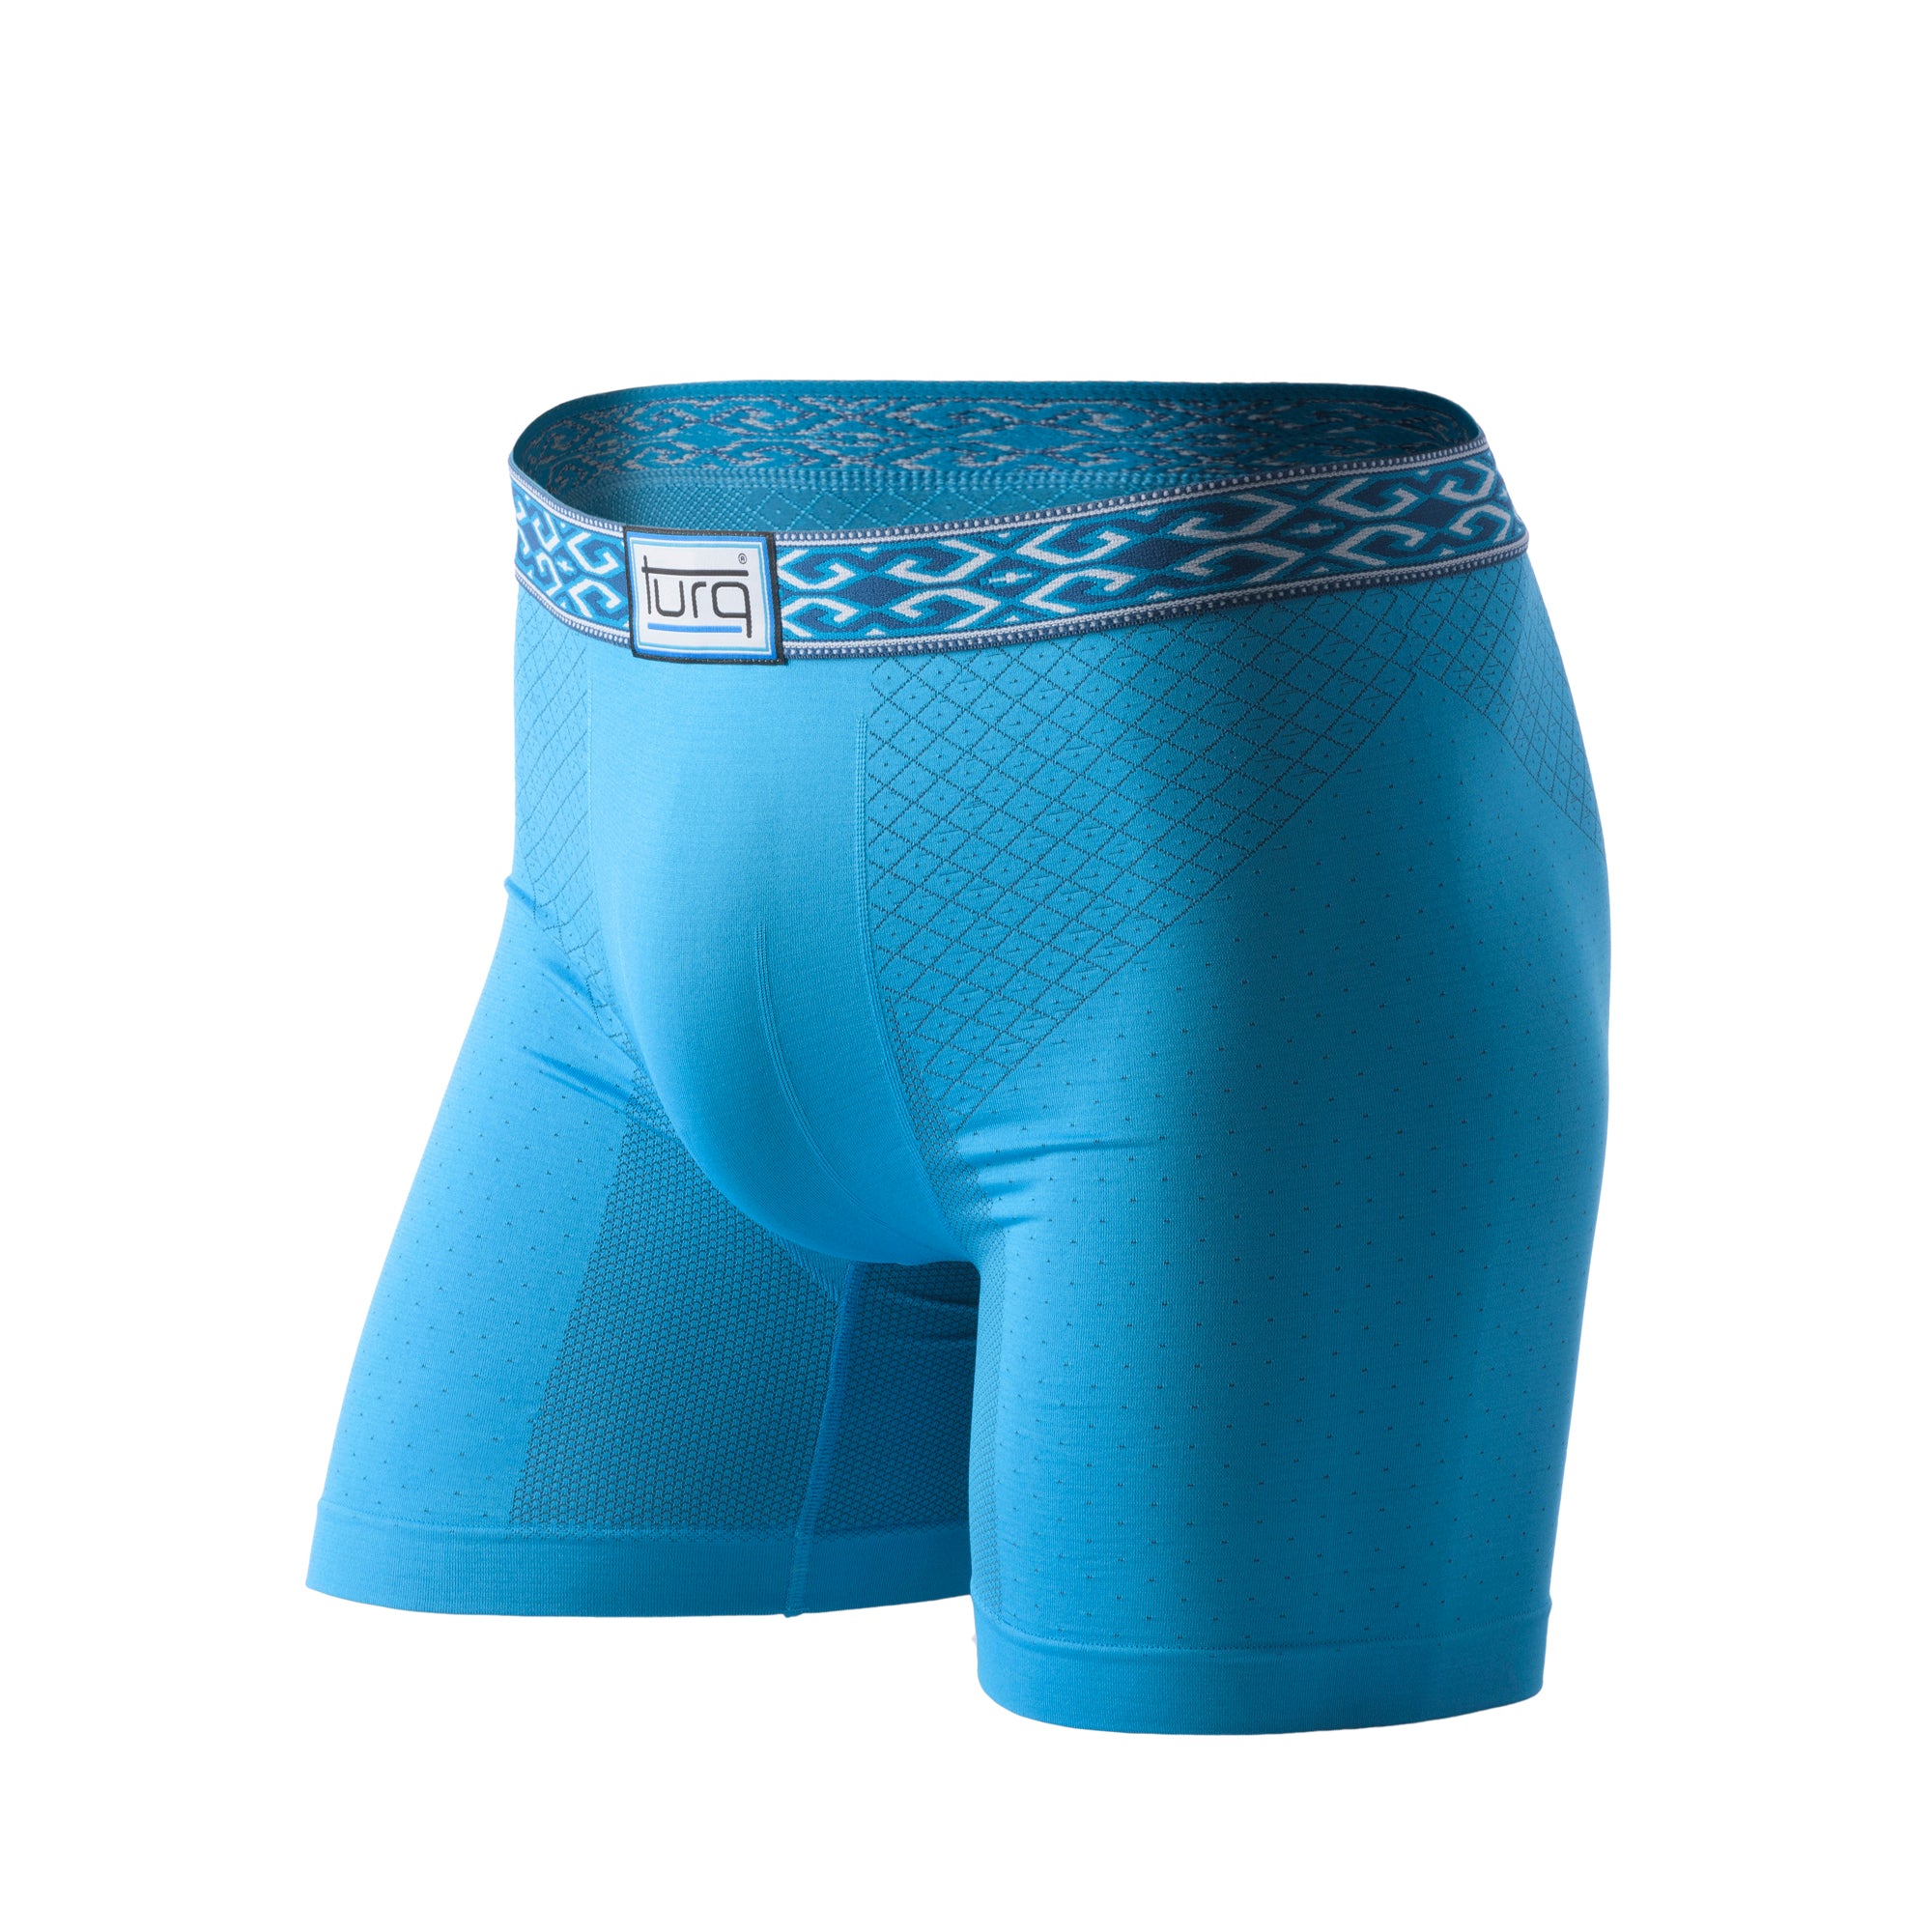 Freestyle Fit Collection | Men's Performance Underwear | Turq Sport